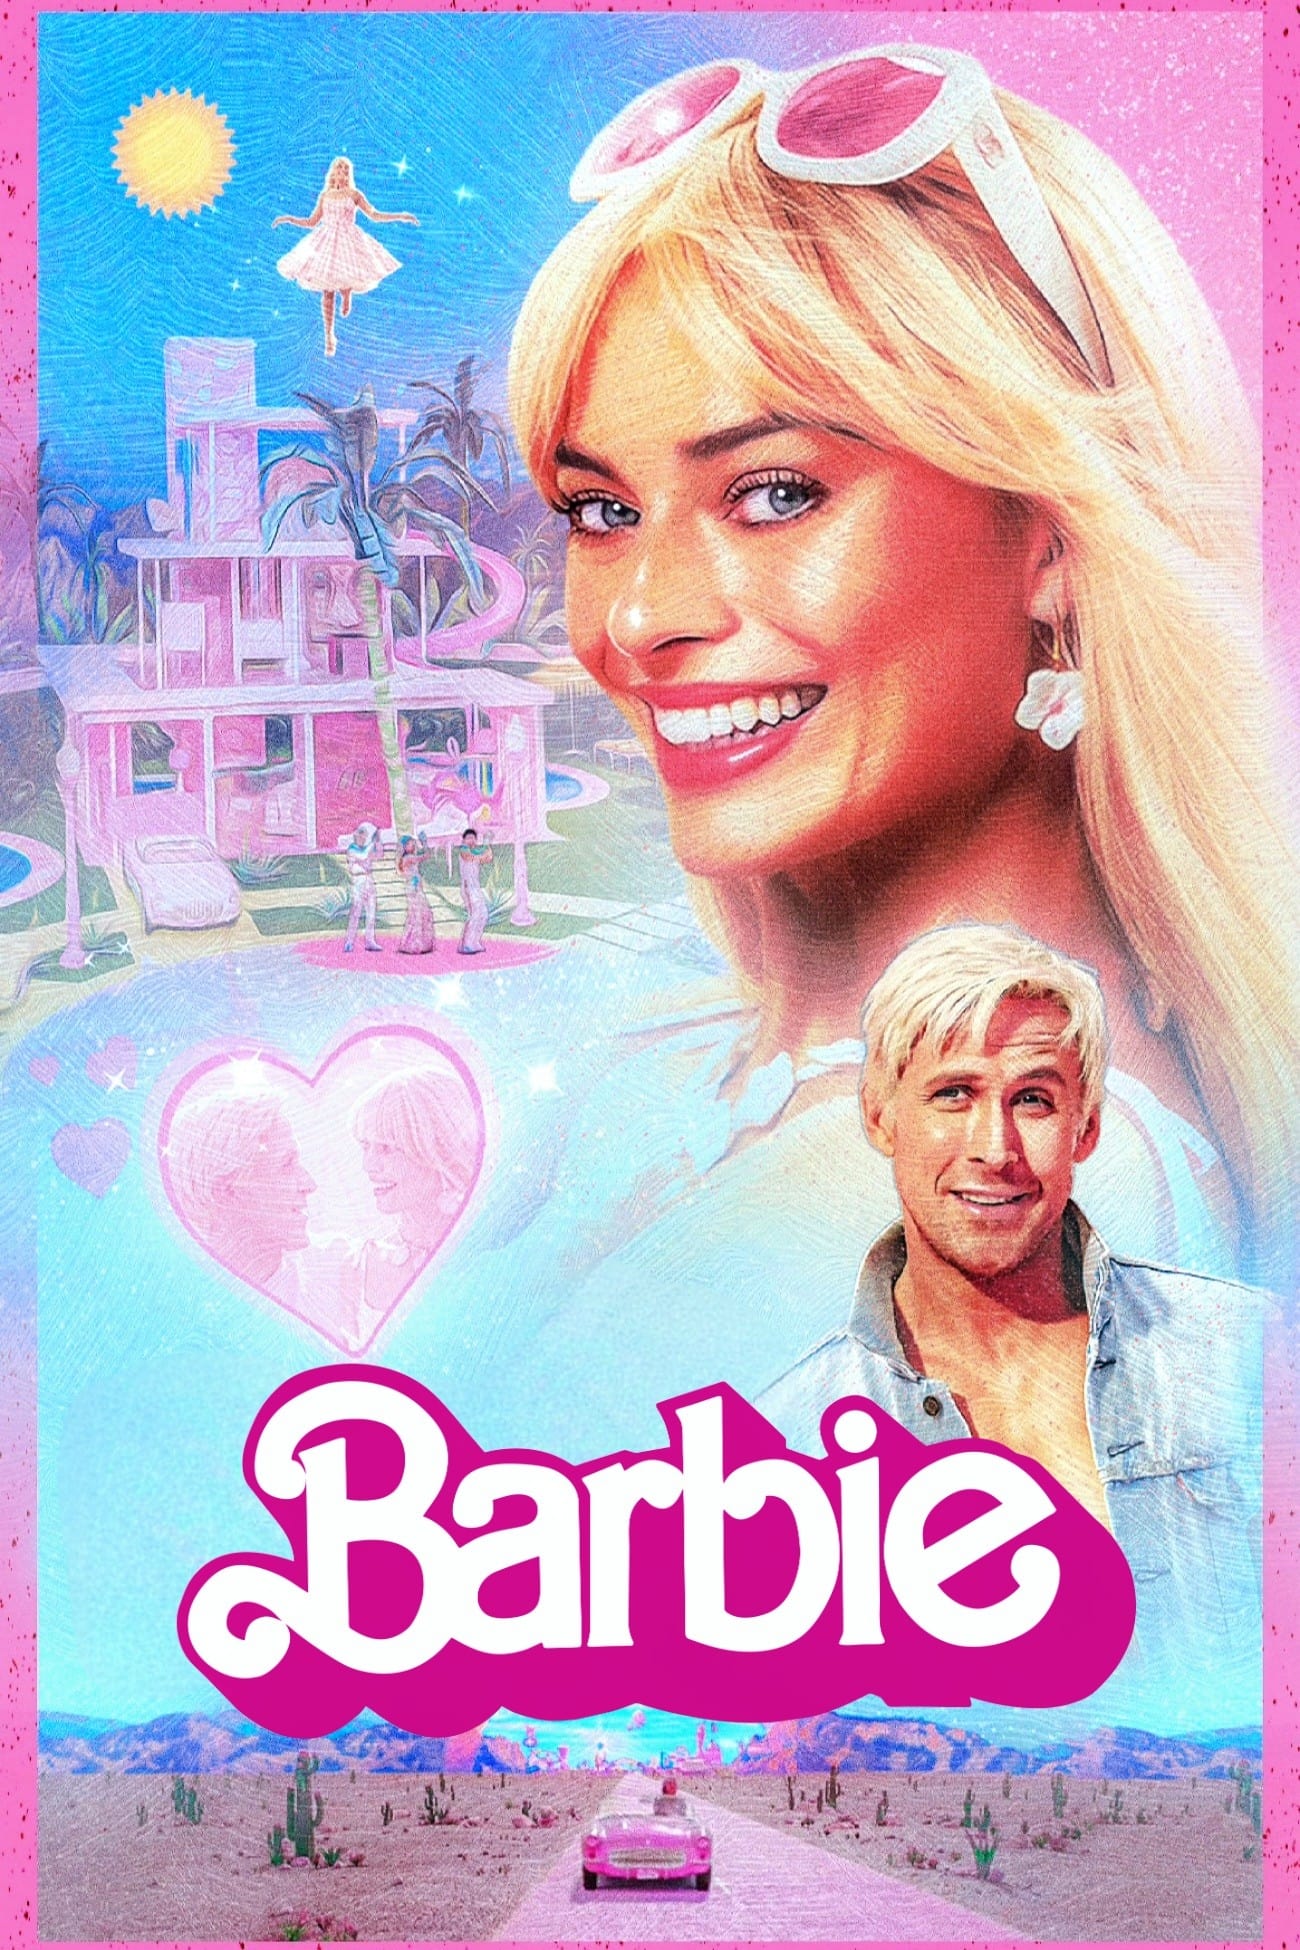 Image Barbie